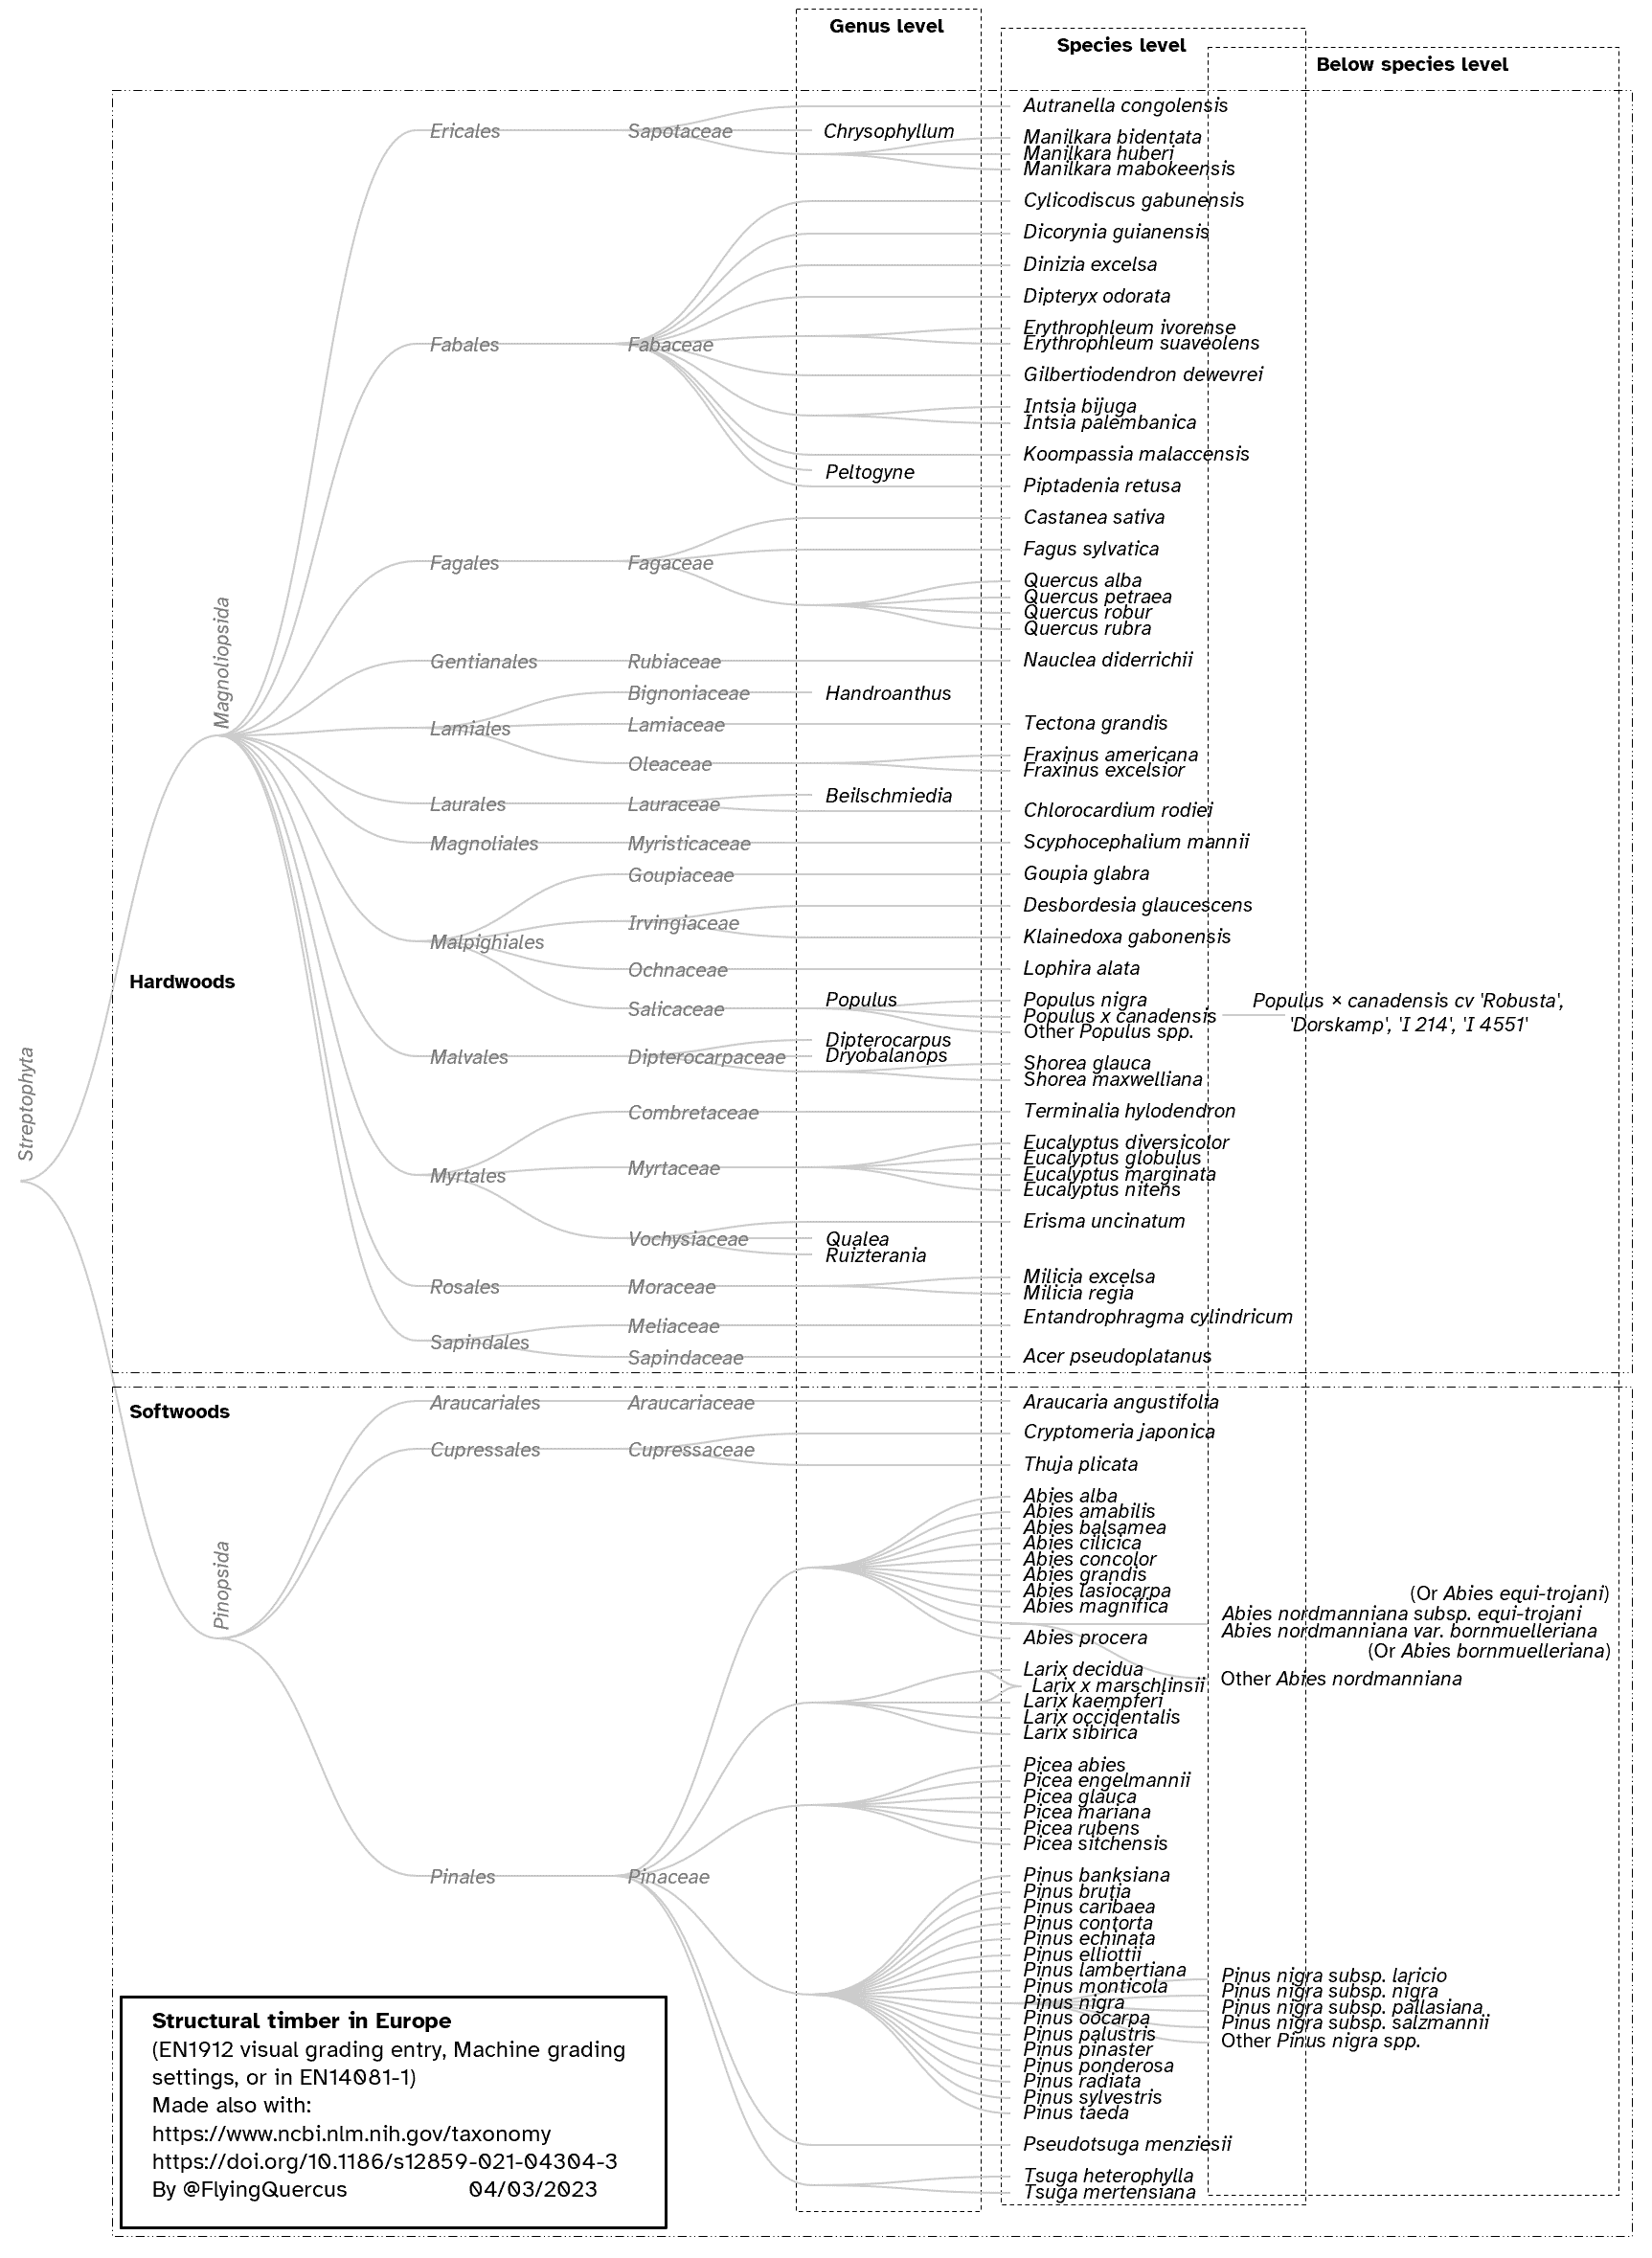 A taxonomy diagram